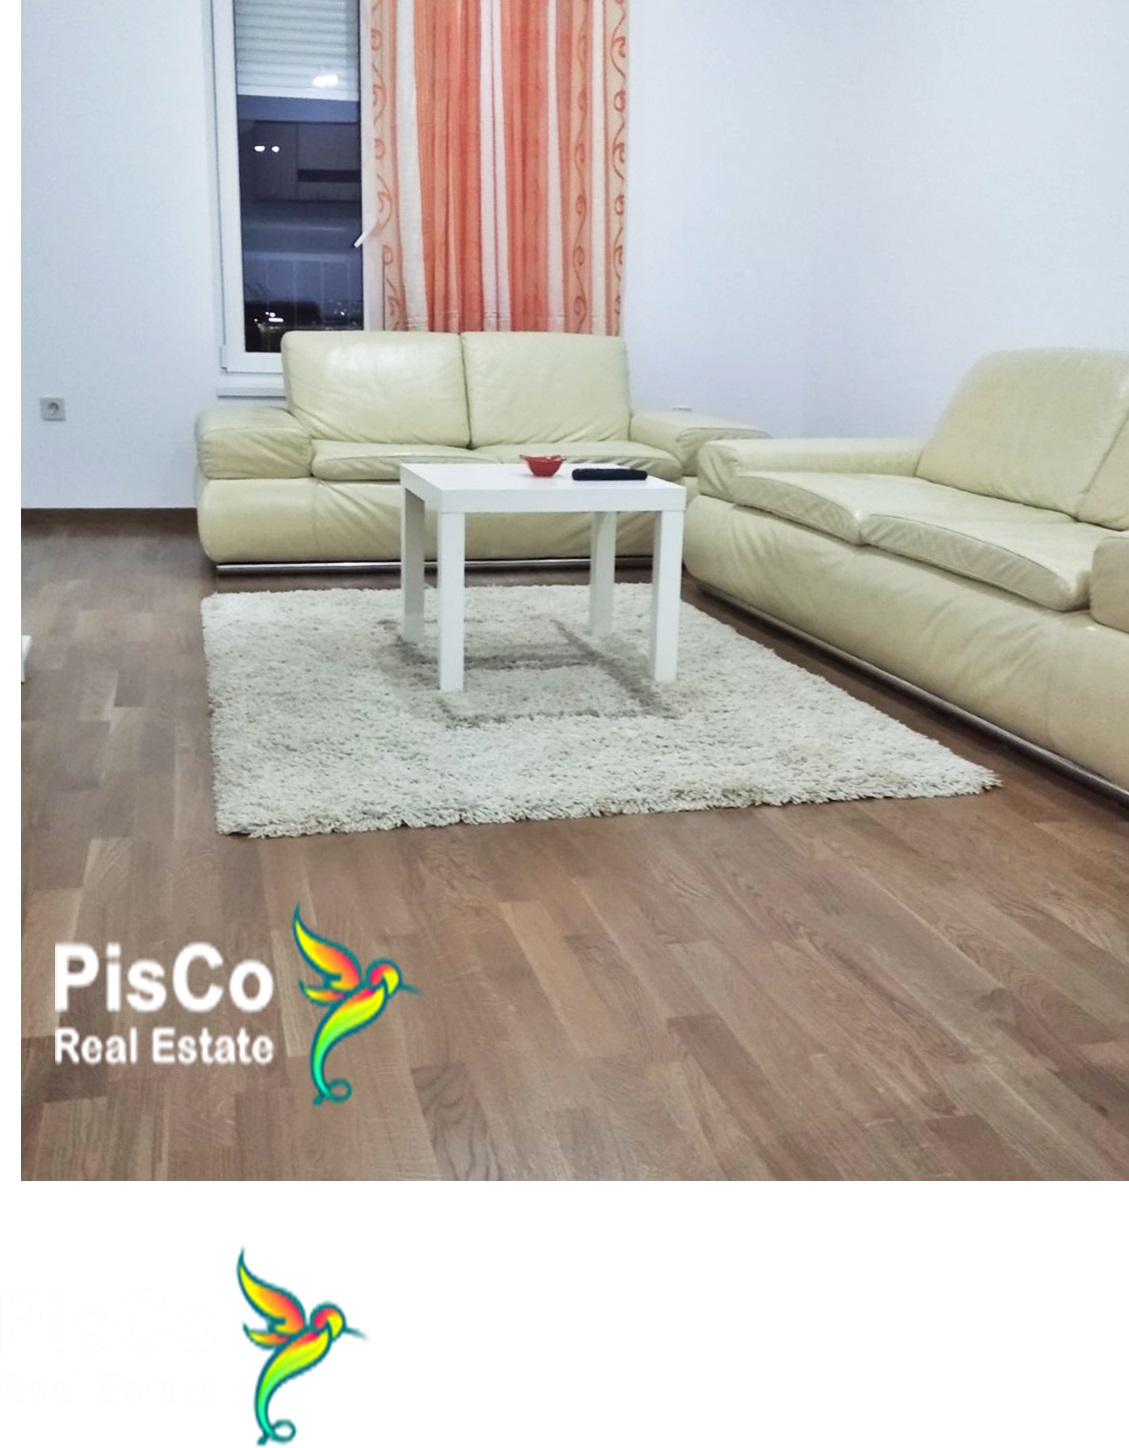 FOR RENT New one-bedroom apartment in Južna Kapija Grada 45m2